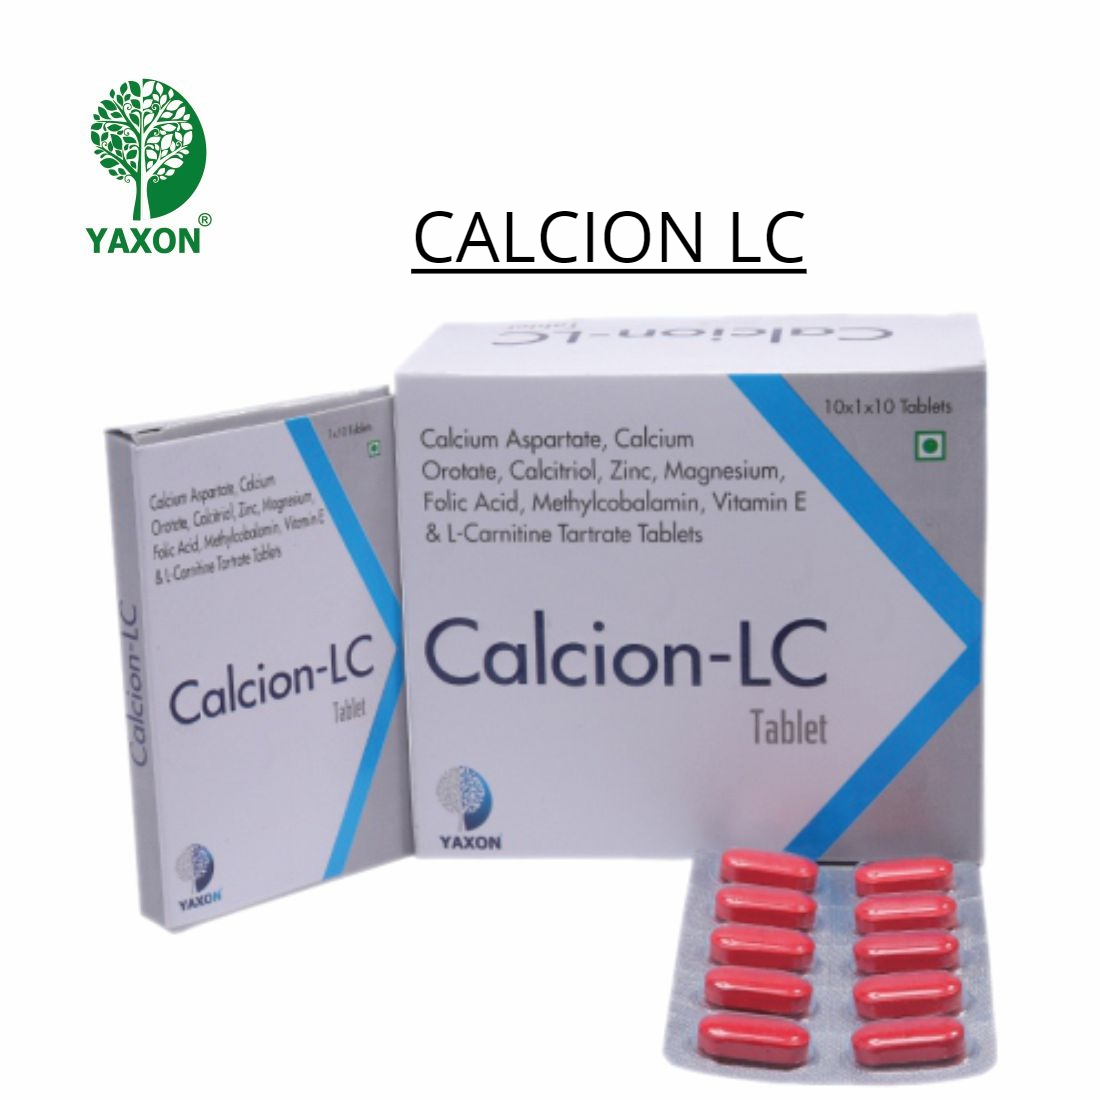 YAXON CALCION LC ORTHO Tablets